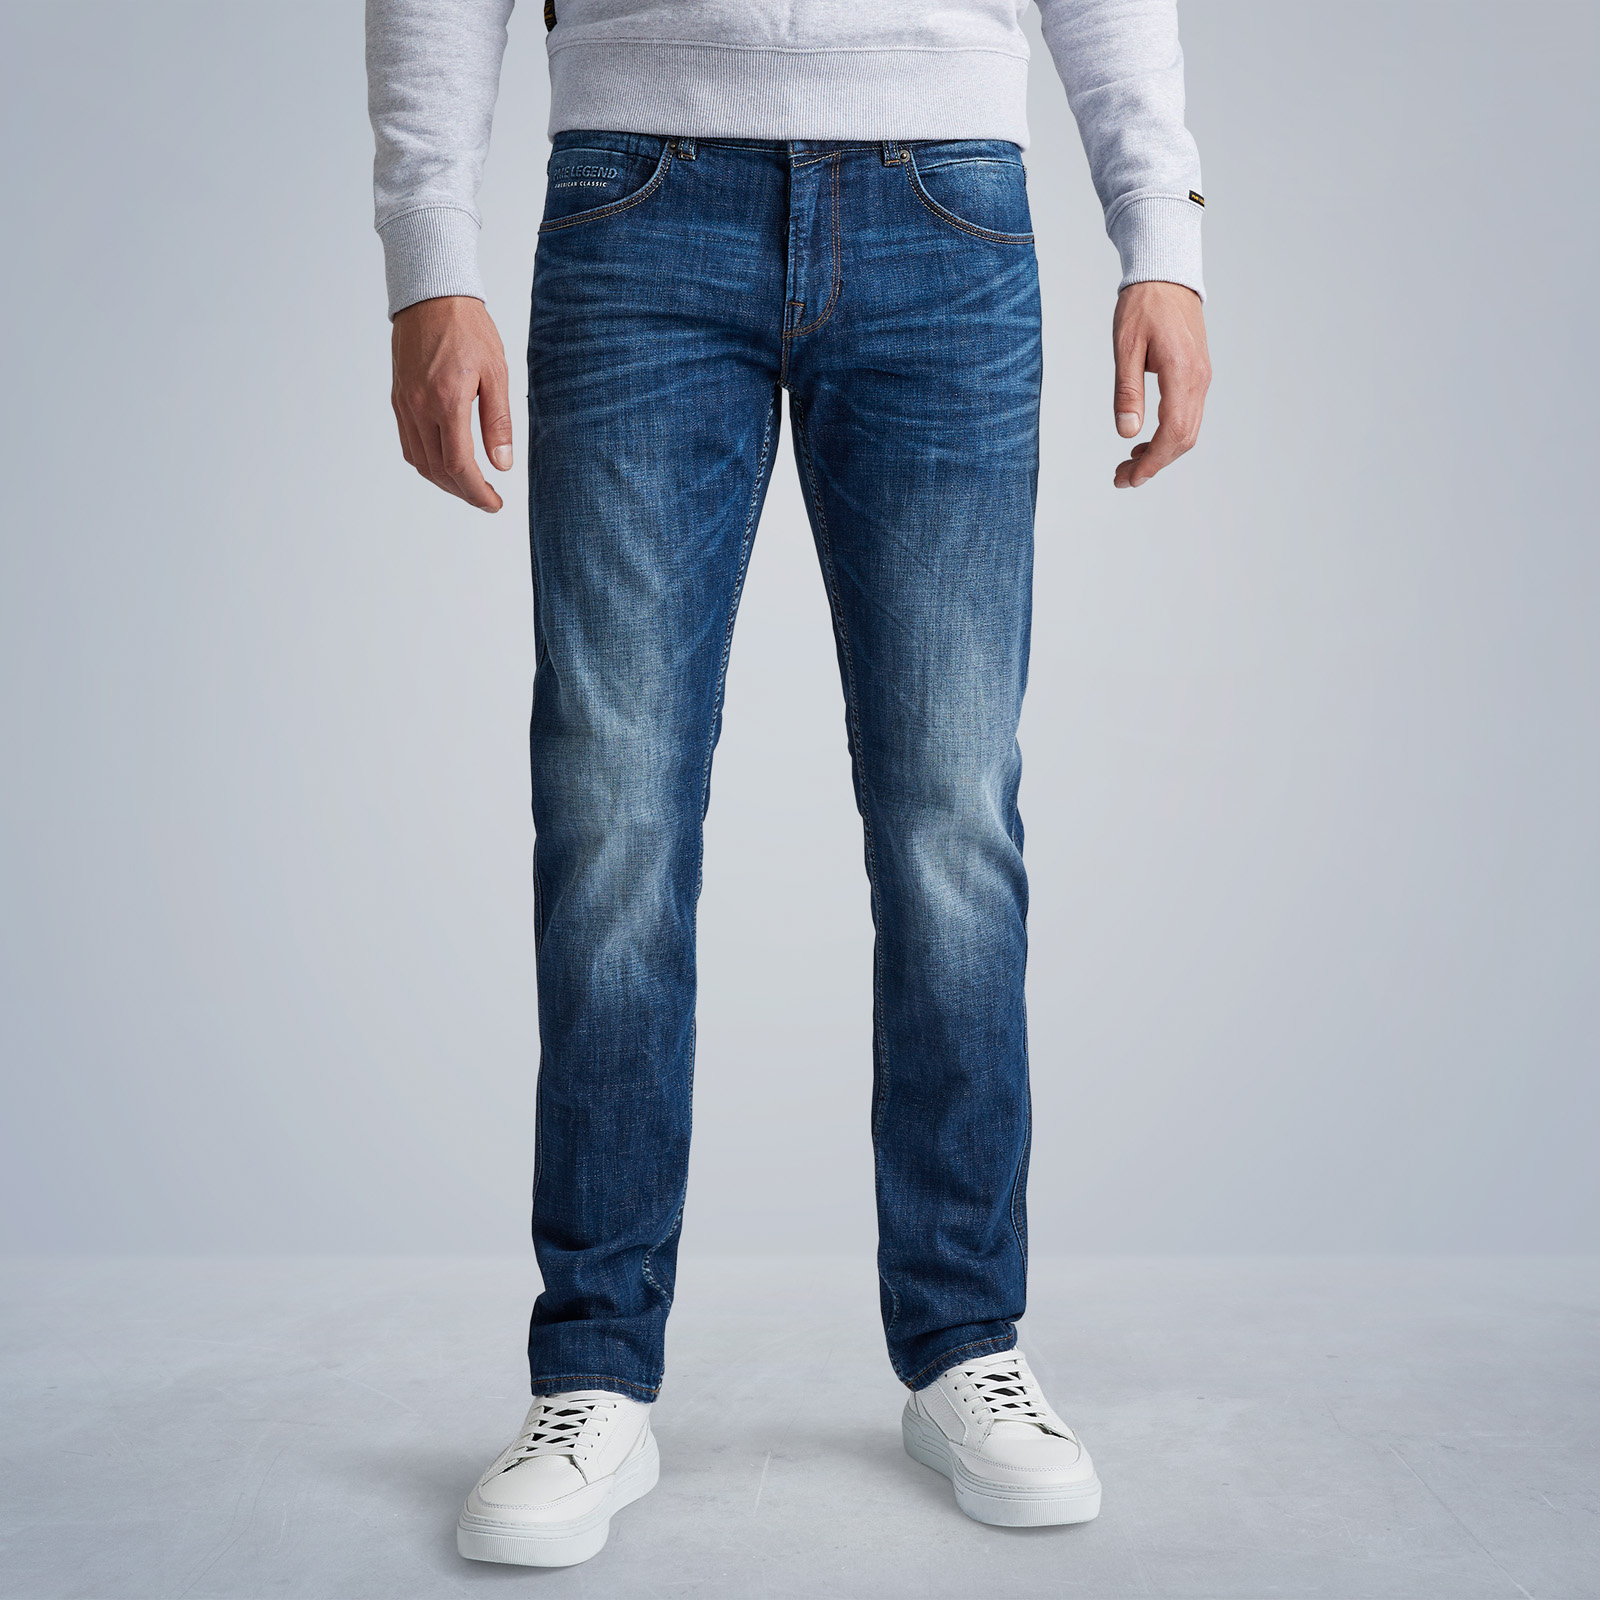 Manieren Evaluatie natuurlijk PME LEGEND | PME Legend Nightflight jeans | Free shipping and returns